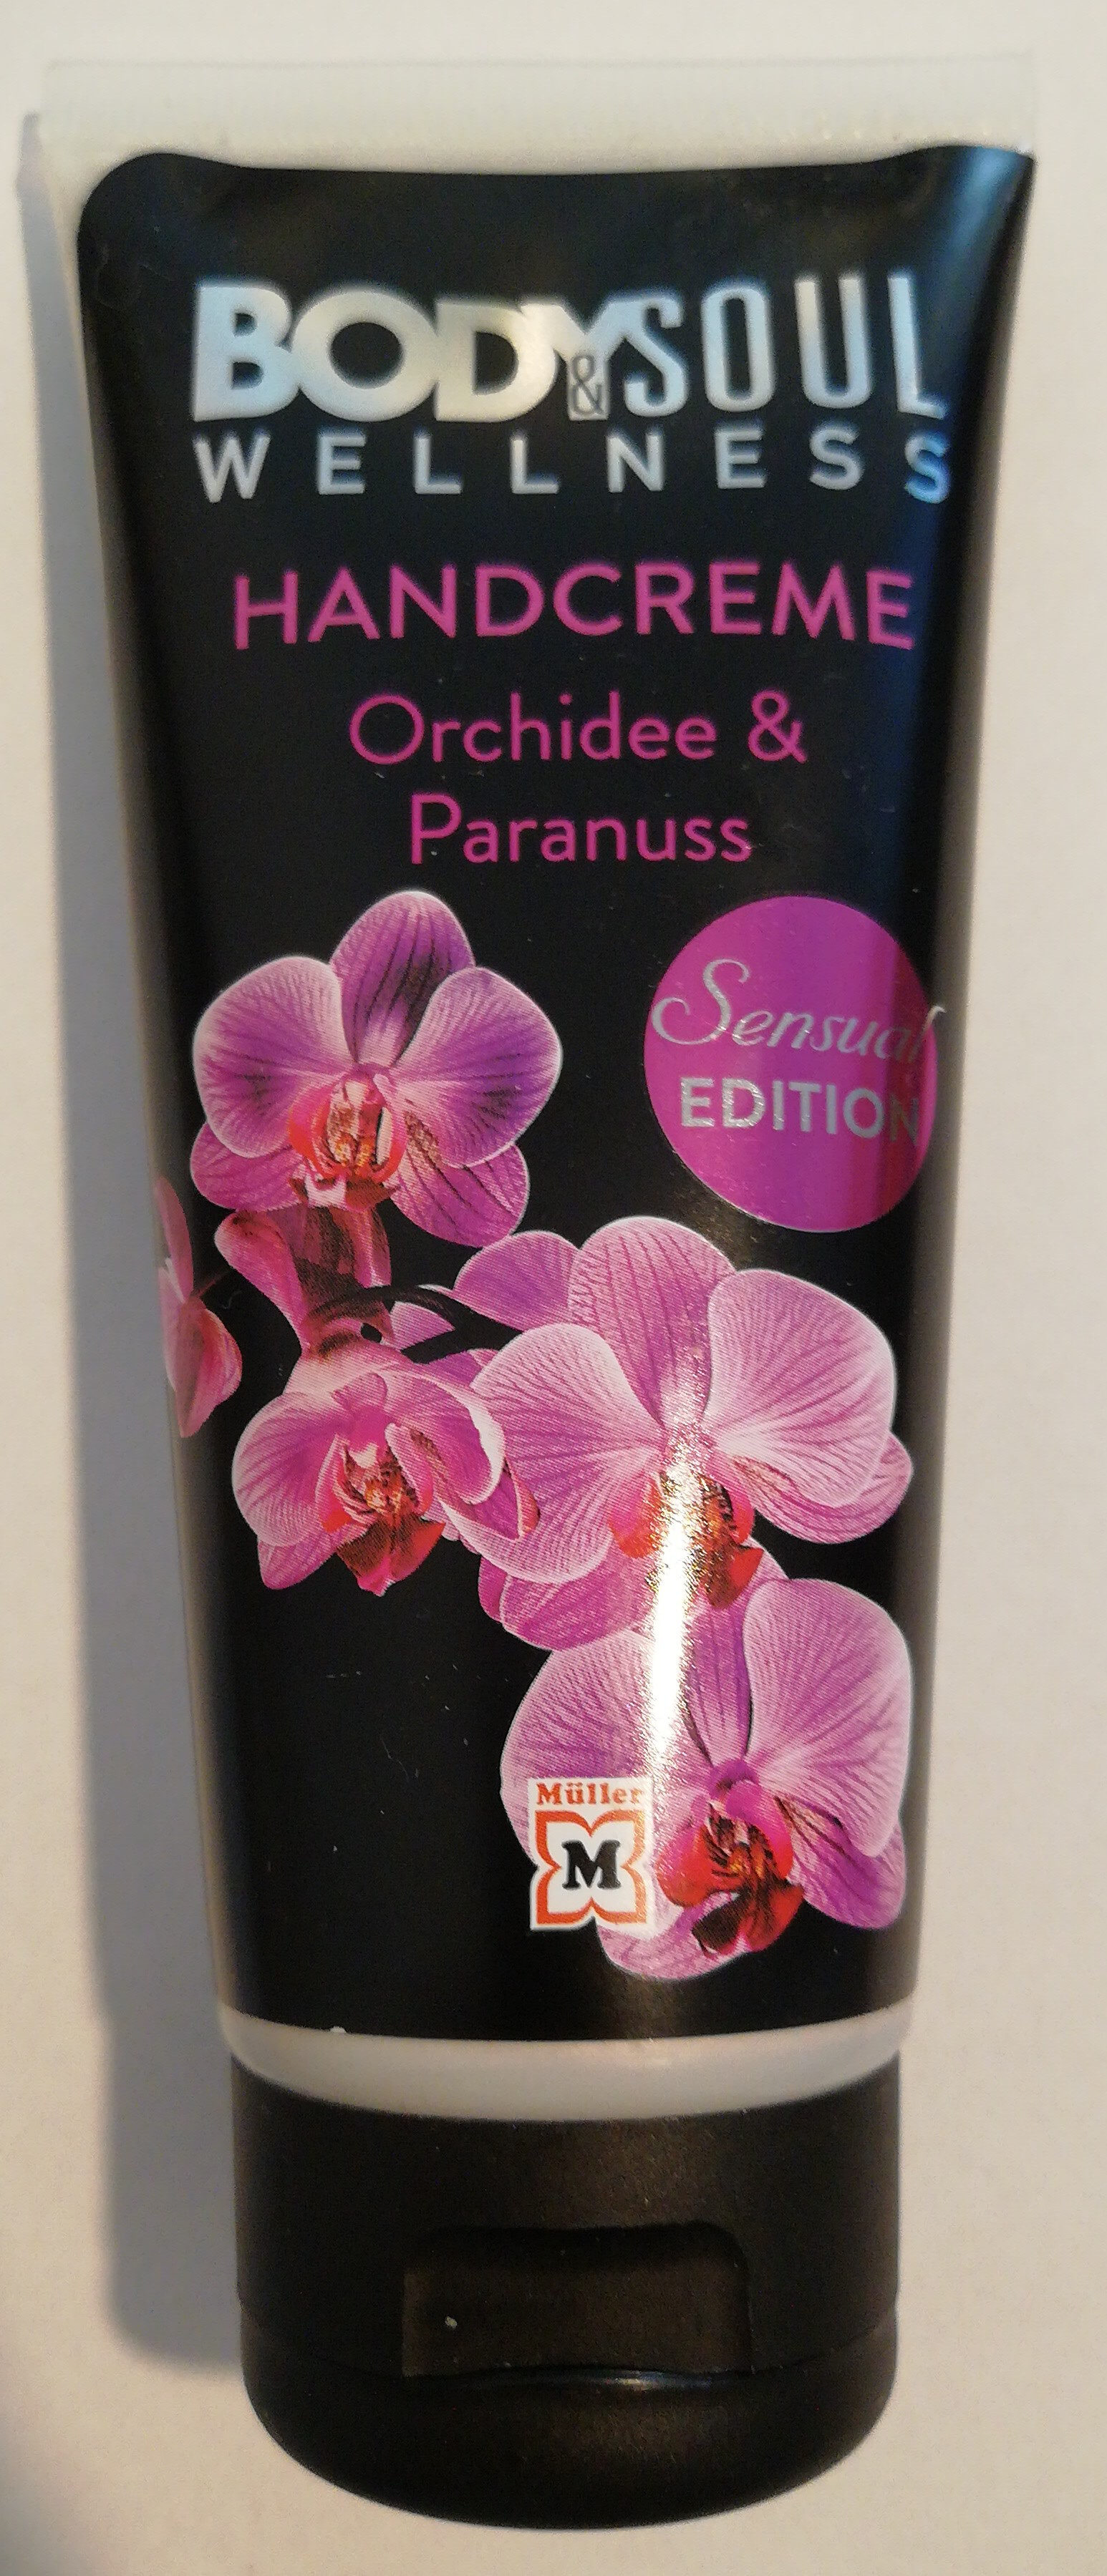 Orchidee & Paranuss Sensual Edition - Produkt - de